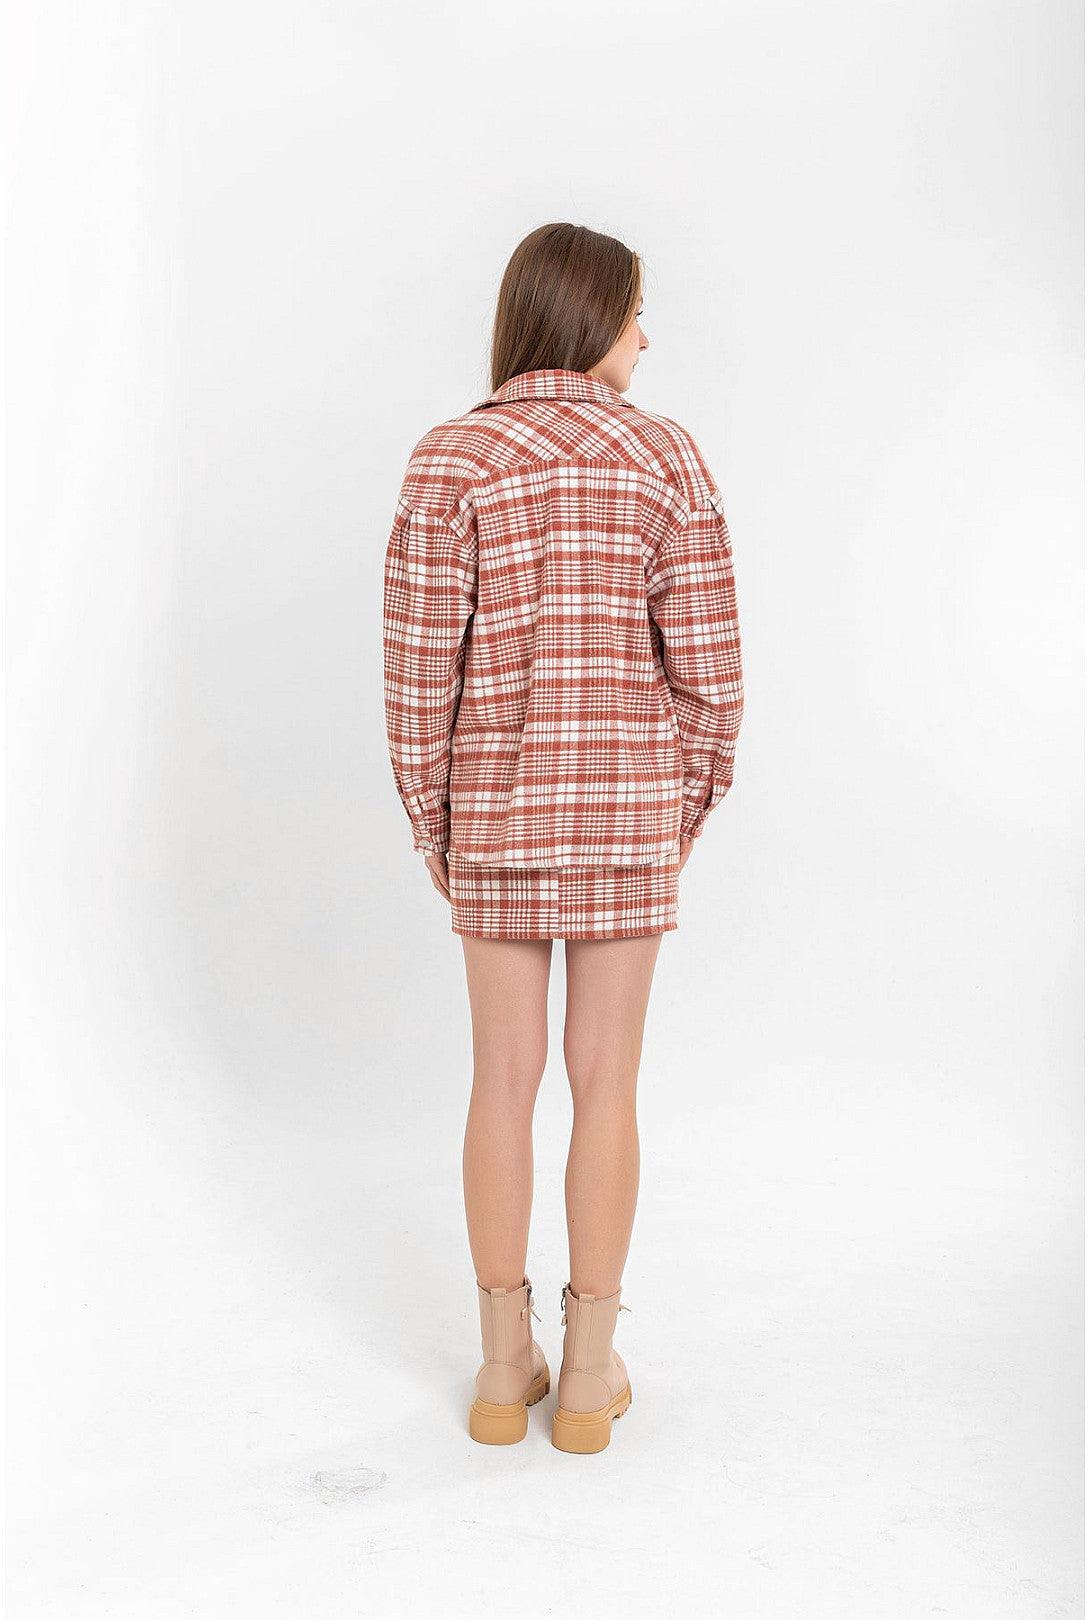 Lumberjack Tight Fit Mini Skirts for Women - Light Brown